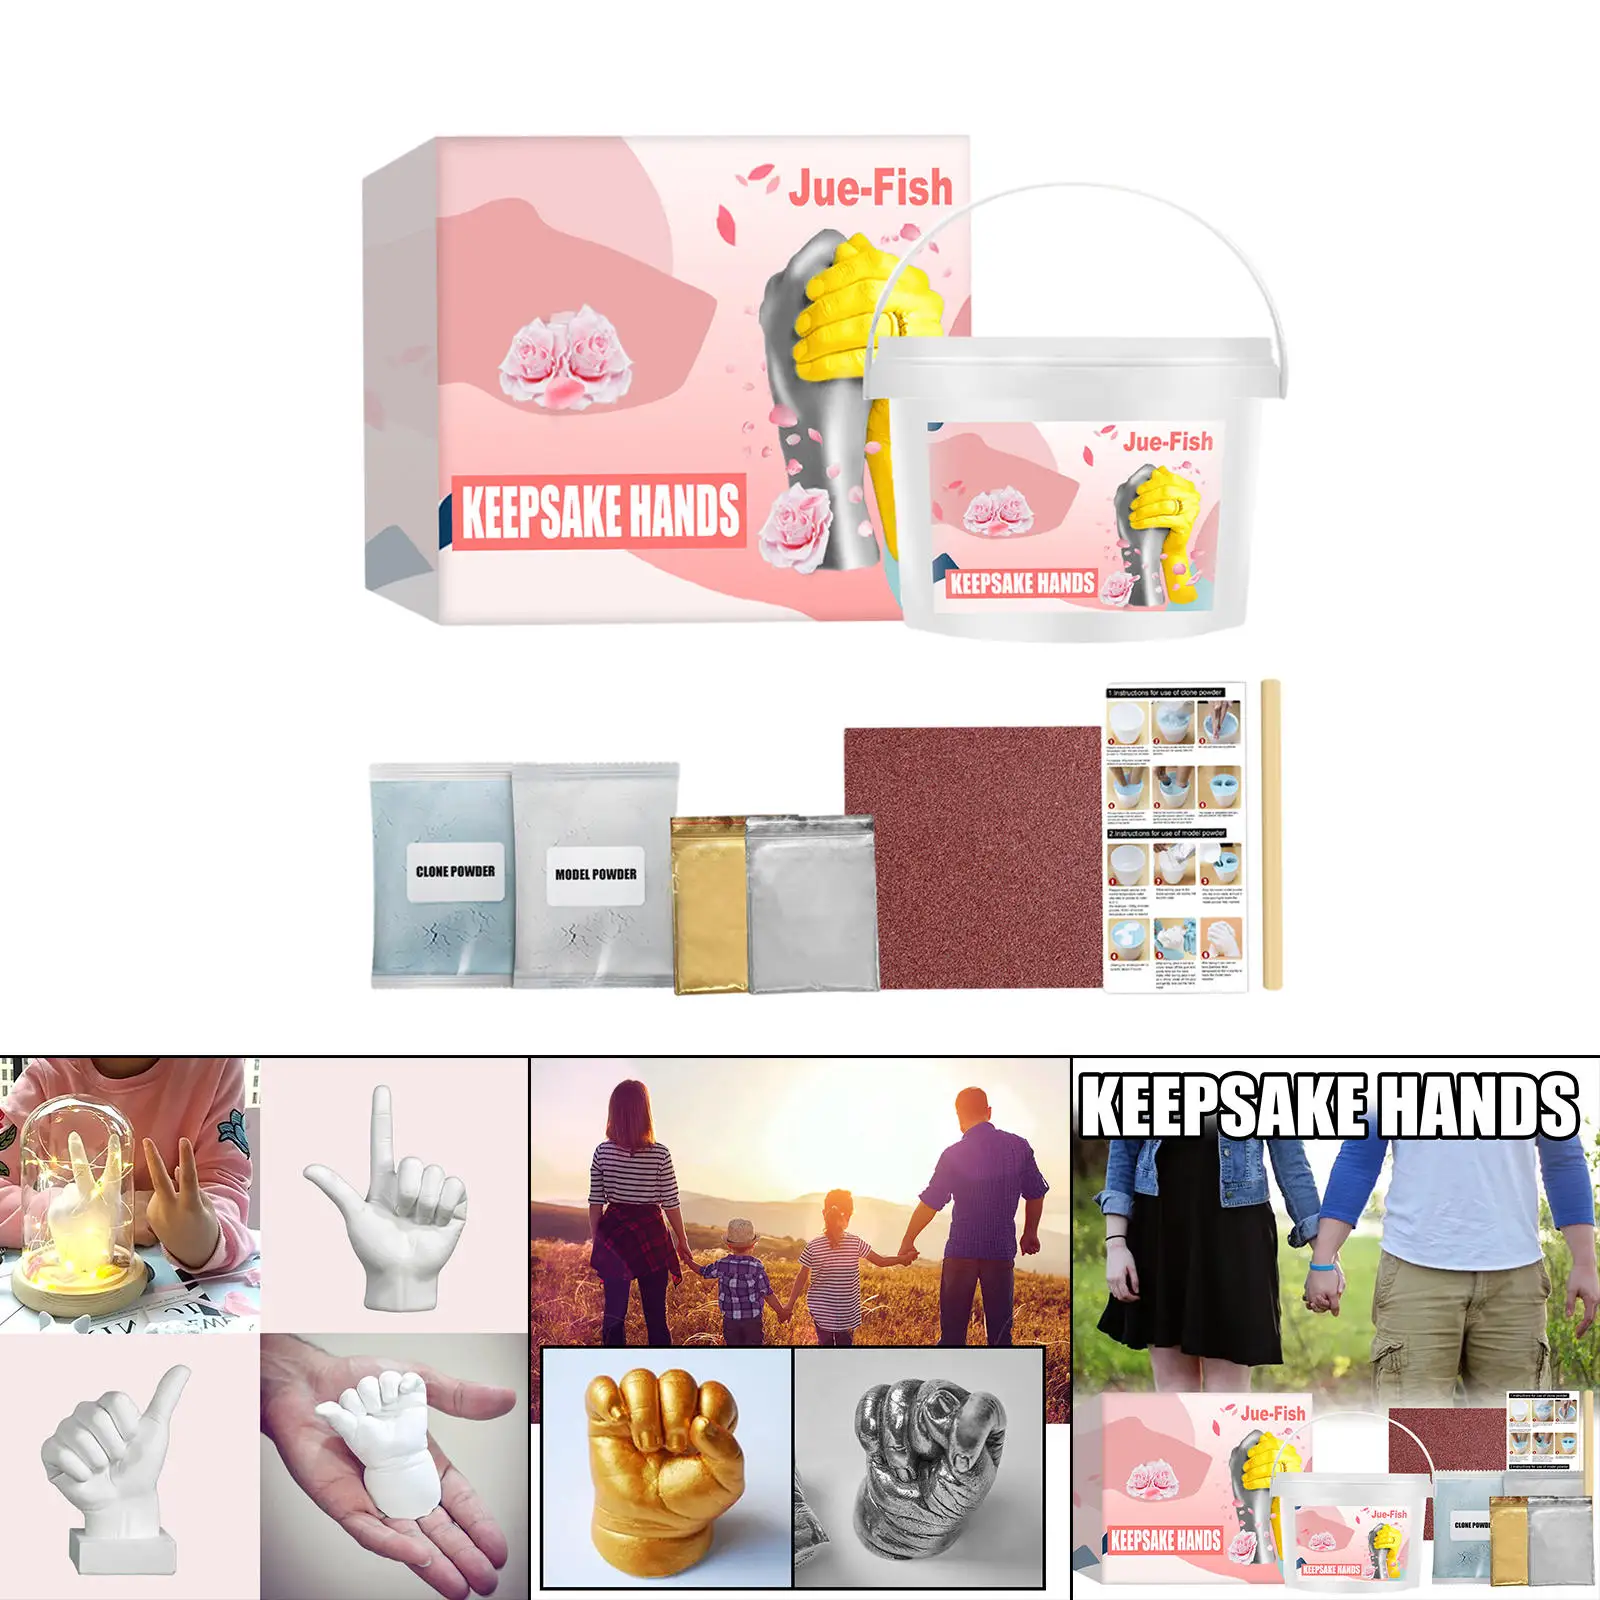 3D Hand & Foot Print Mold DIY Plaster Molding Kit, Couple Baby Keepsakes Molds for Anniversary Birthday Family Activities